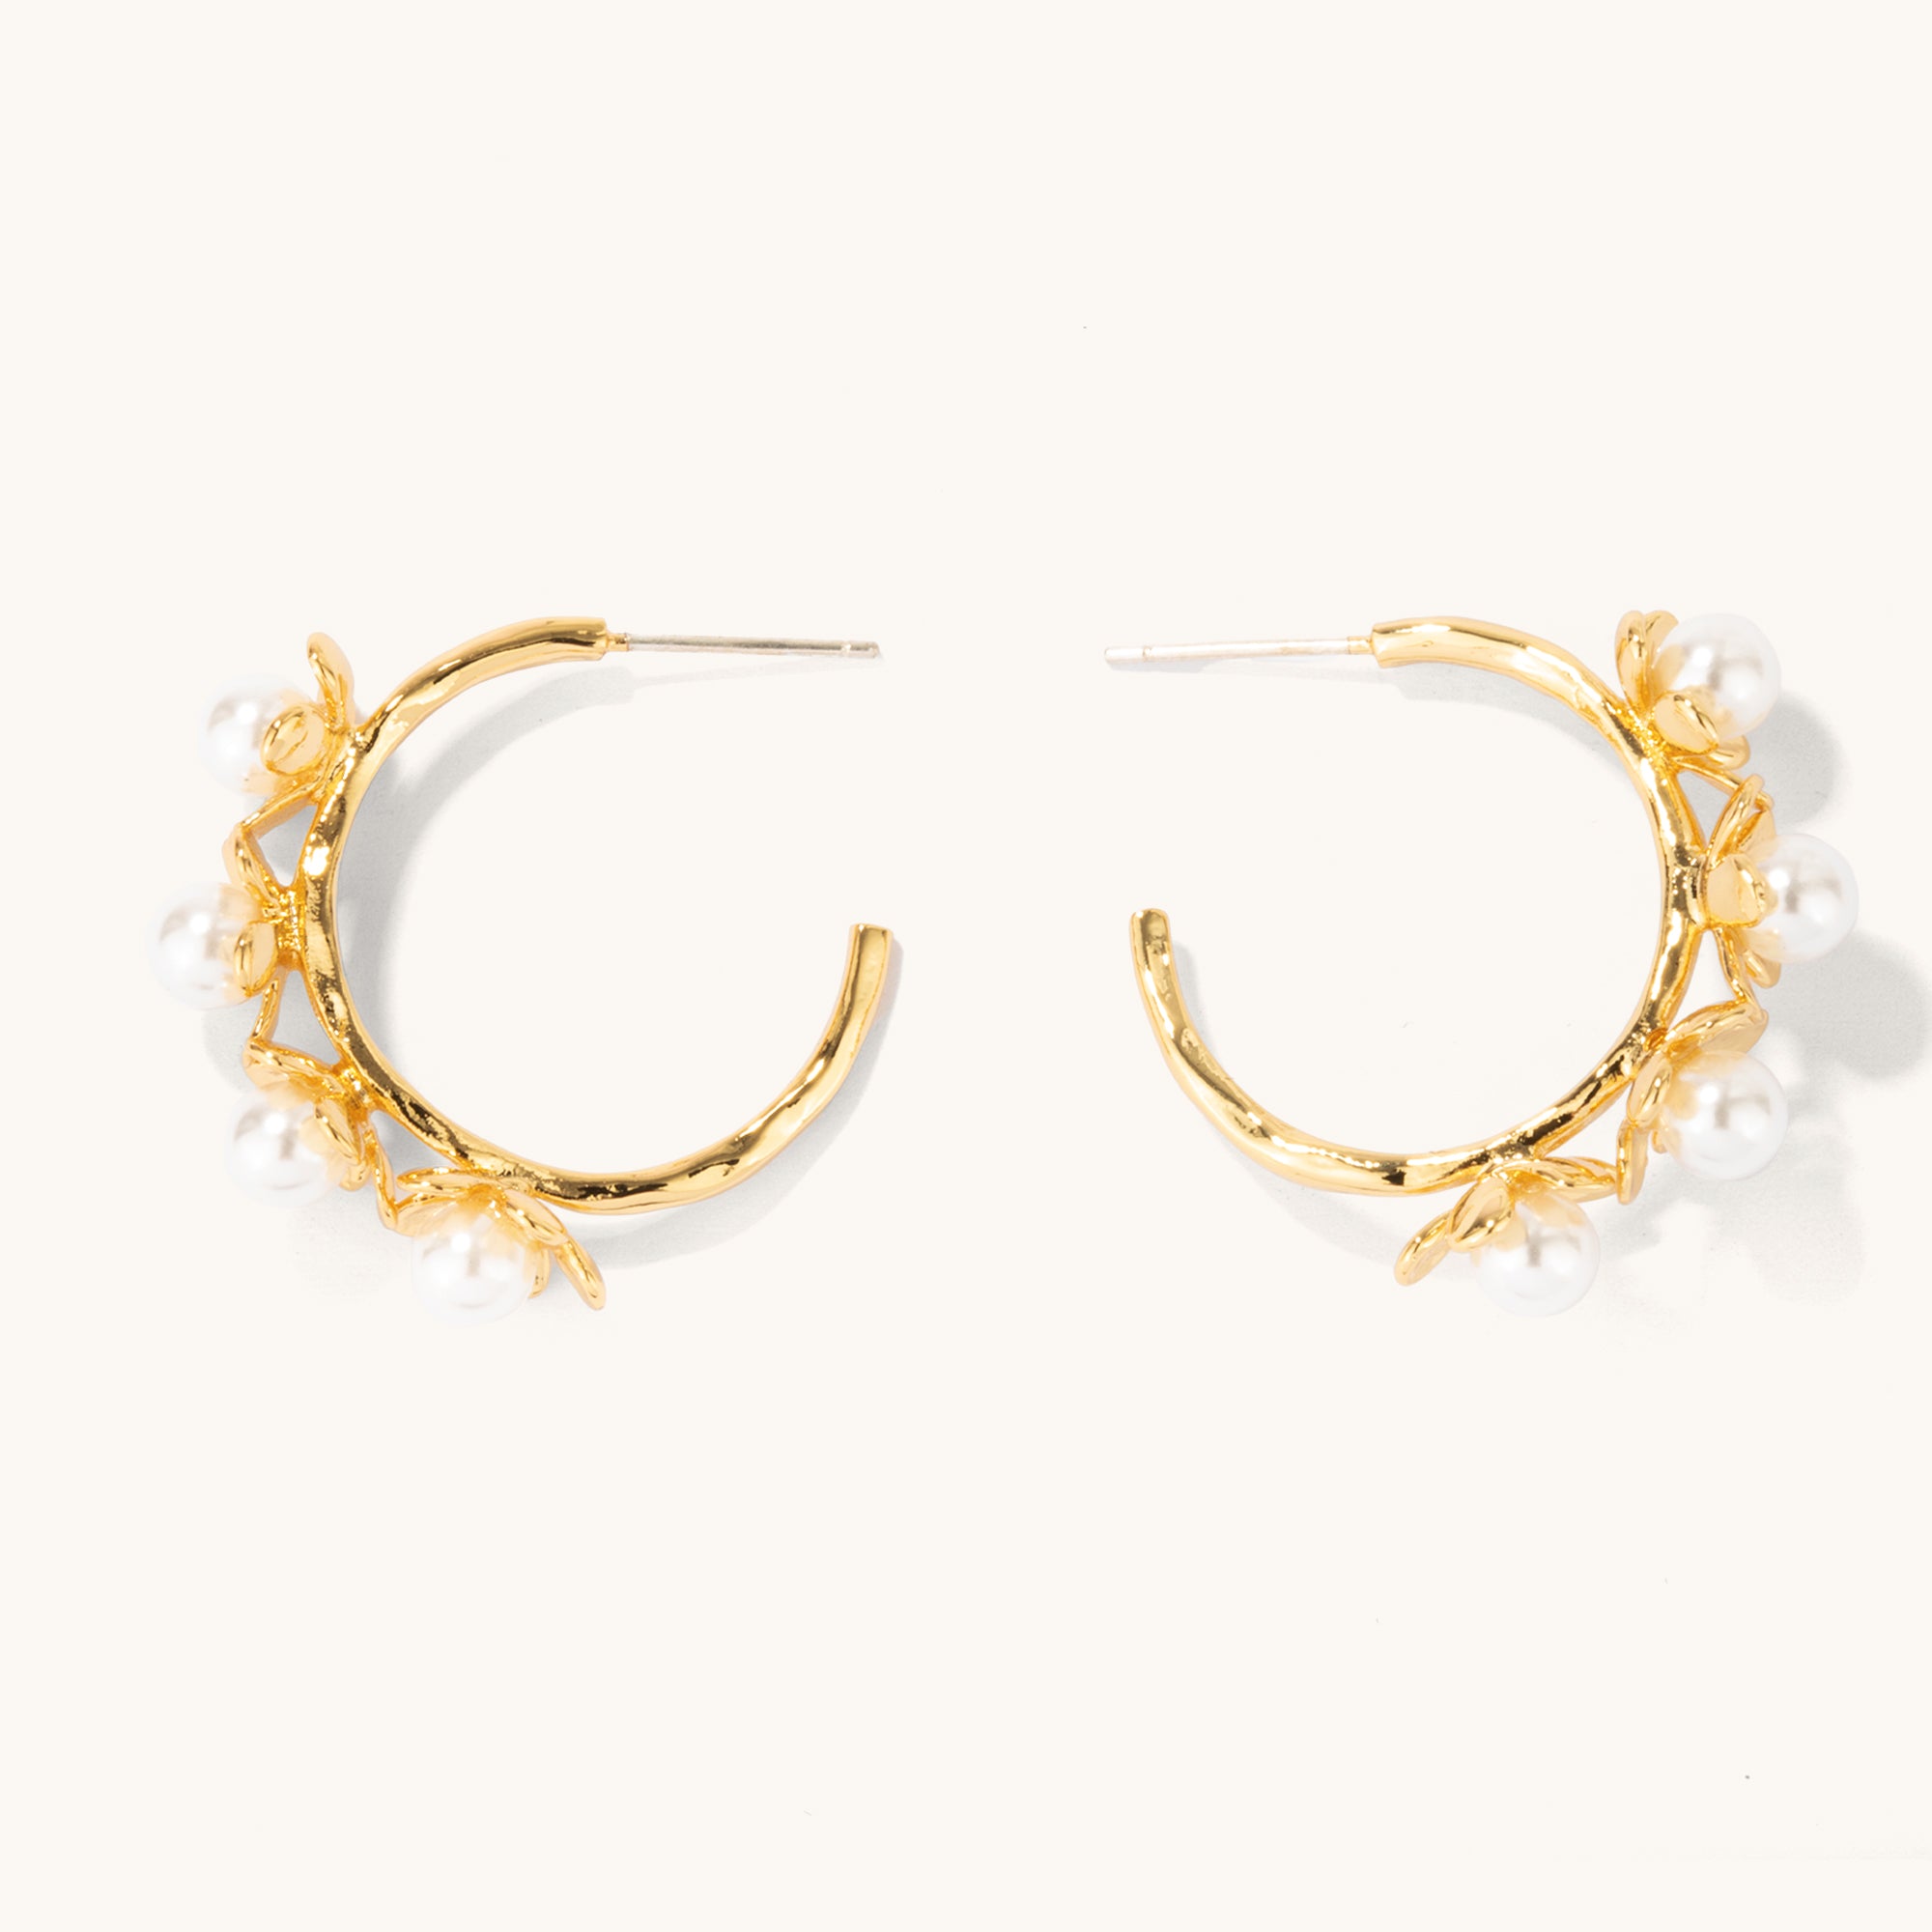 Golden Flower of Pearl Earrings